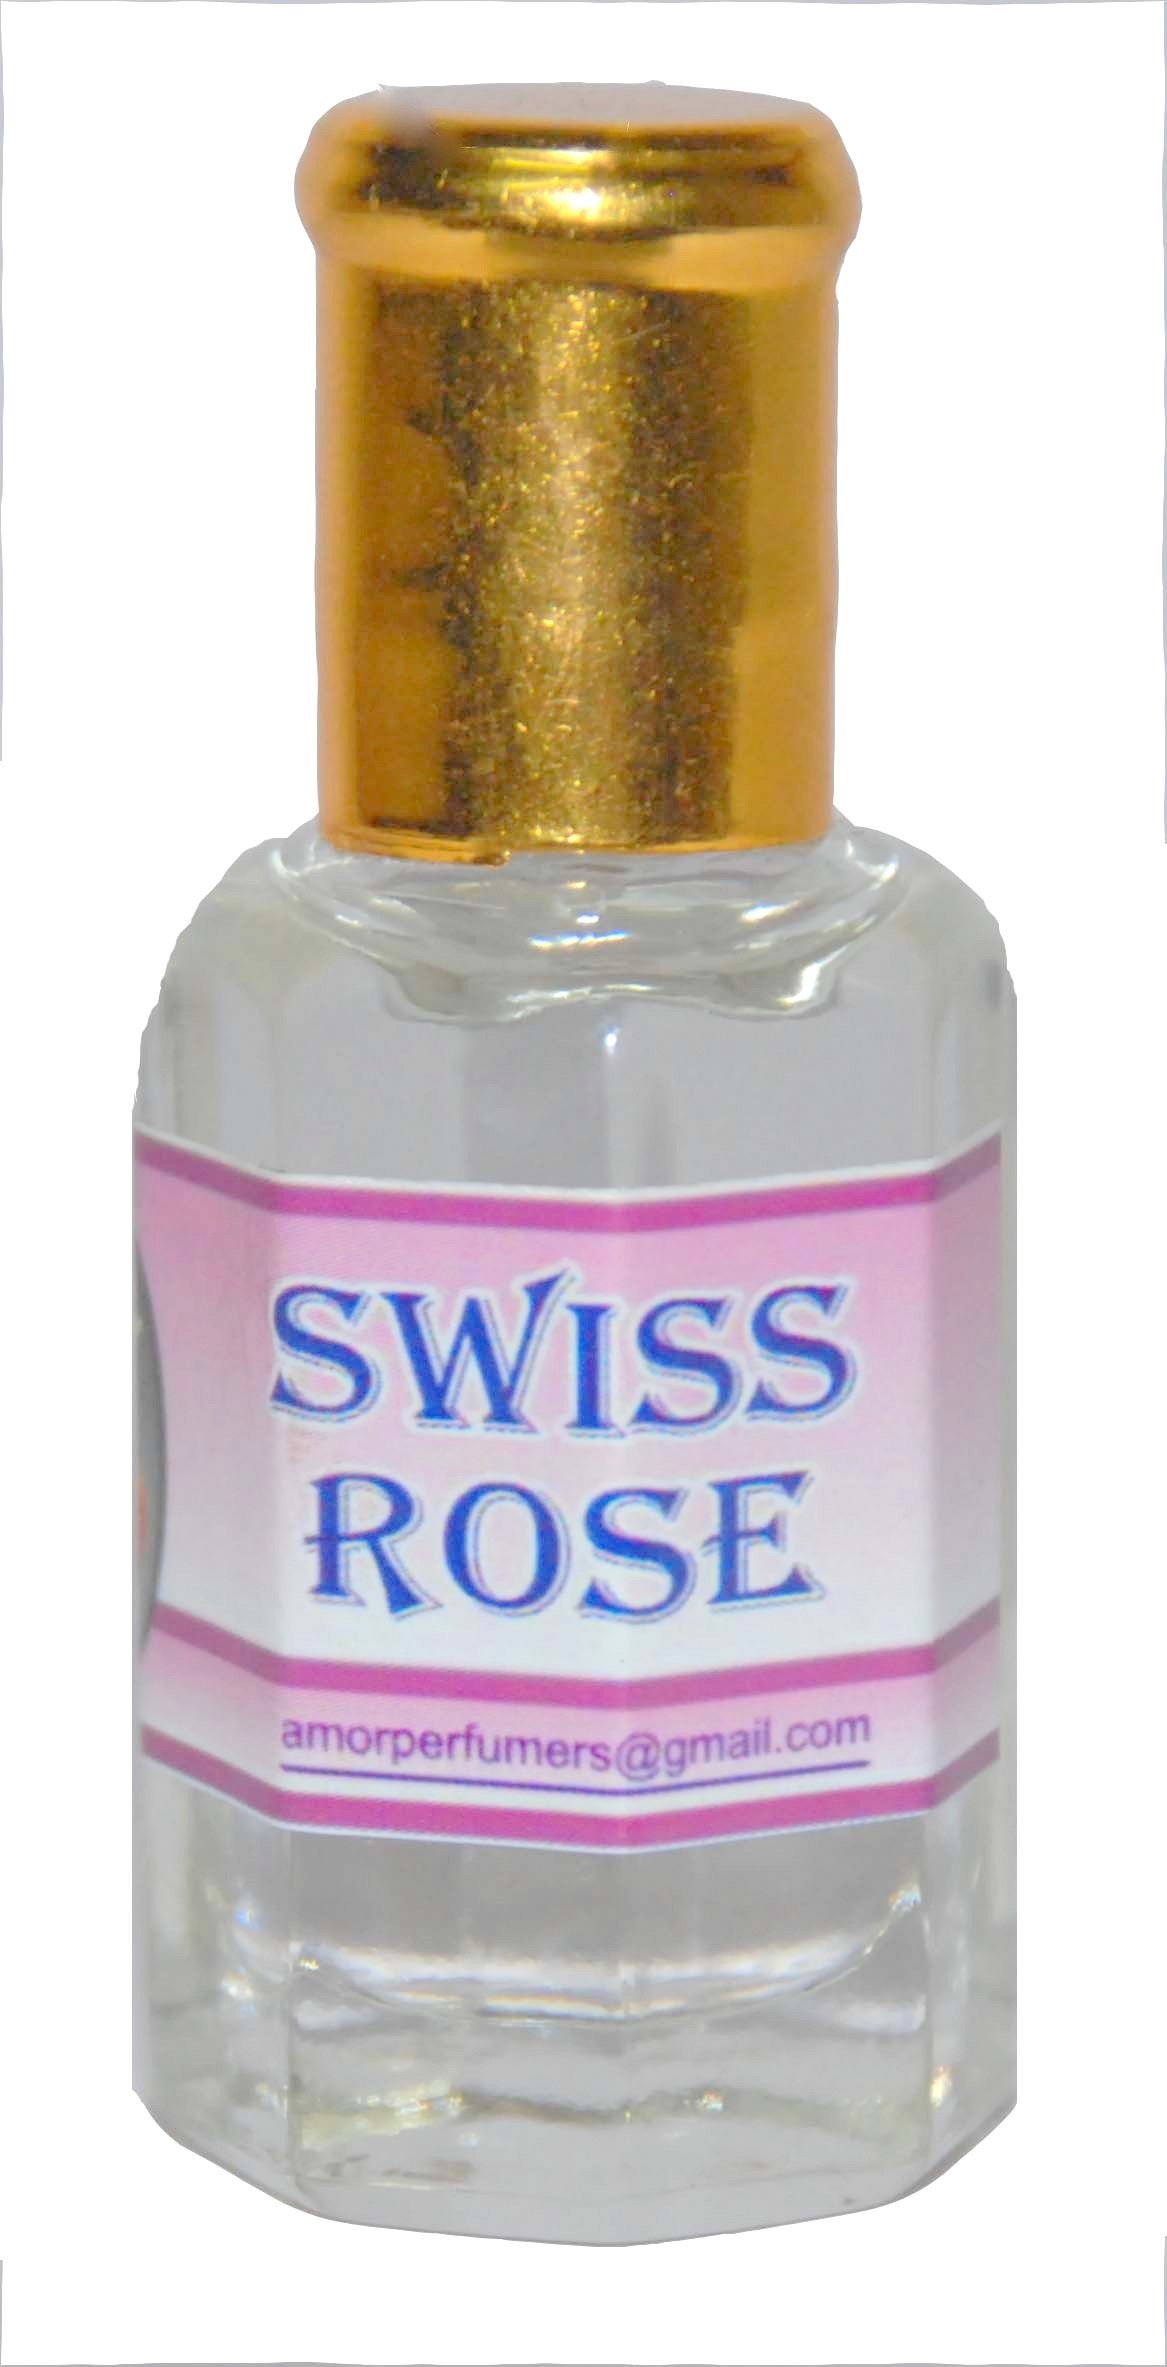 Amor Swiss Rose Floral Attar(Rose)